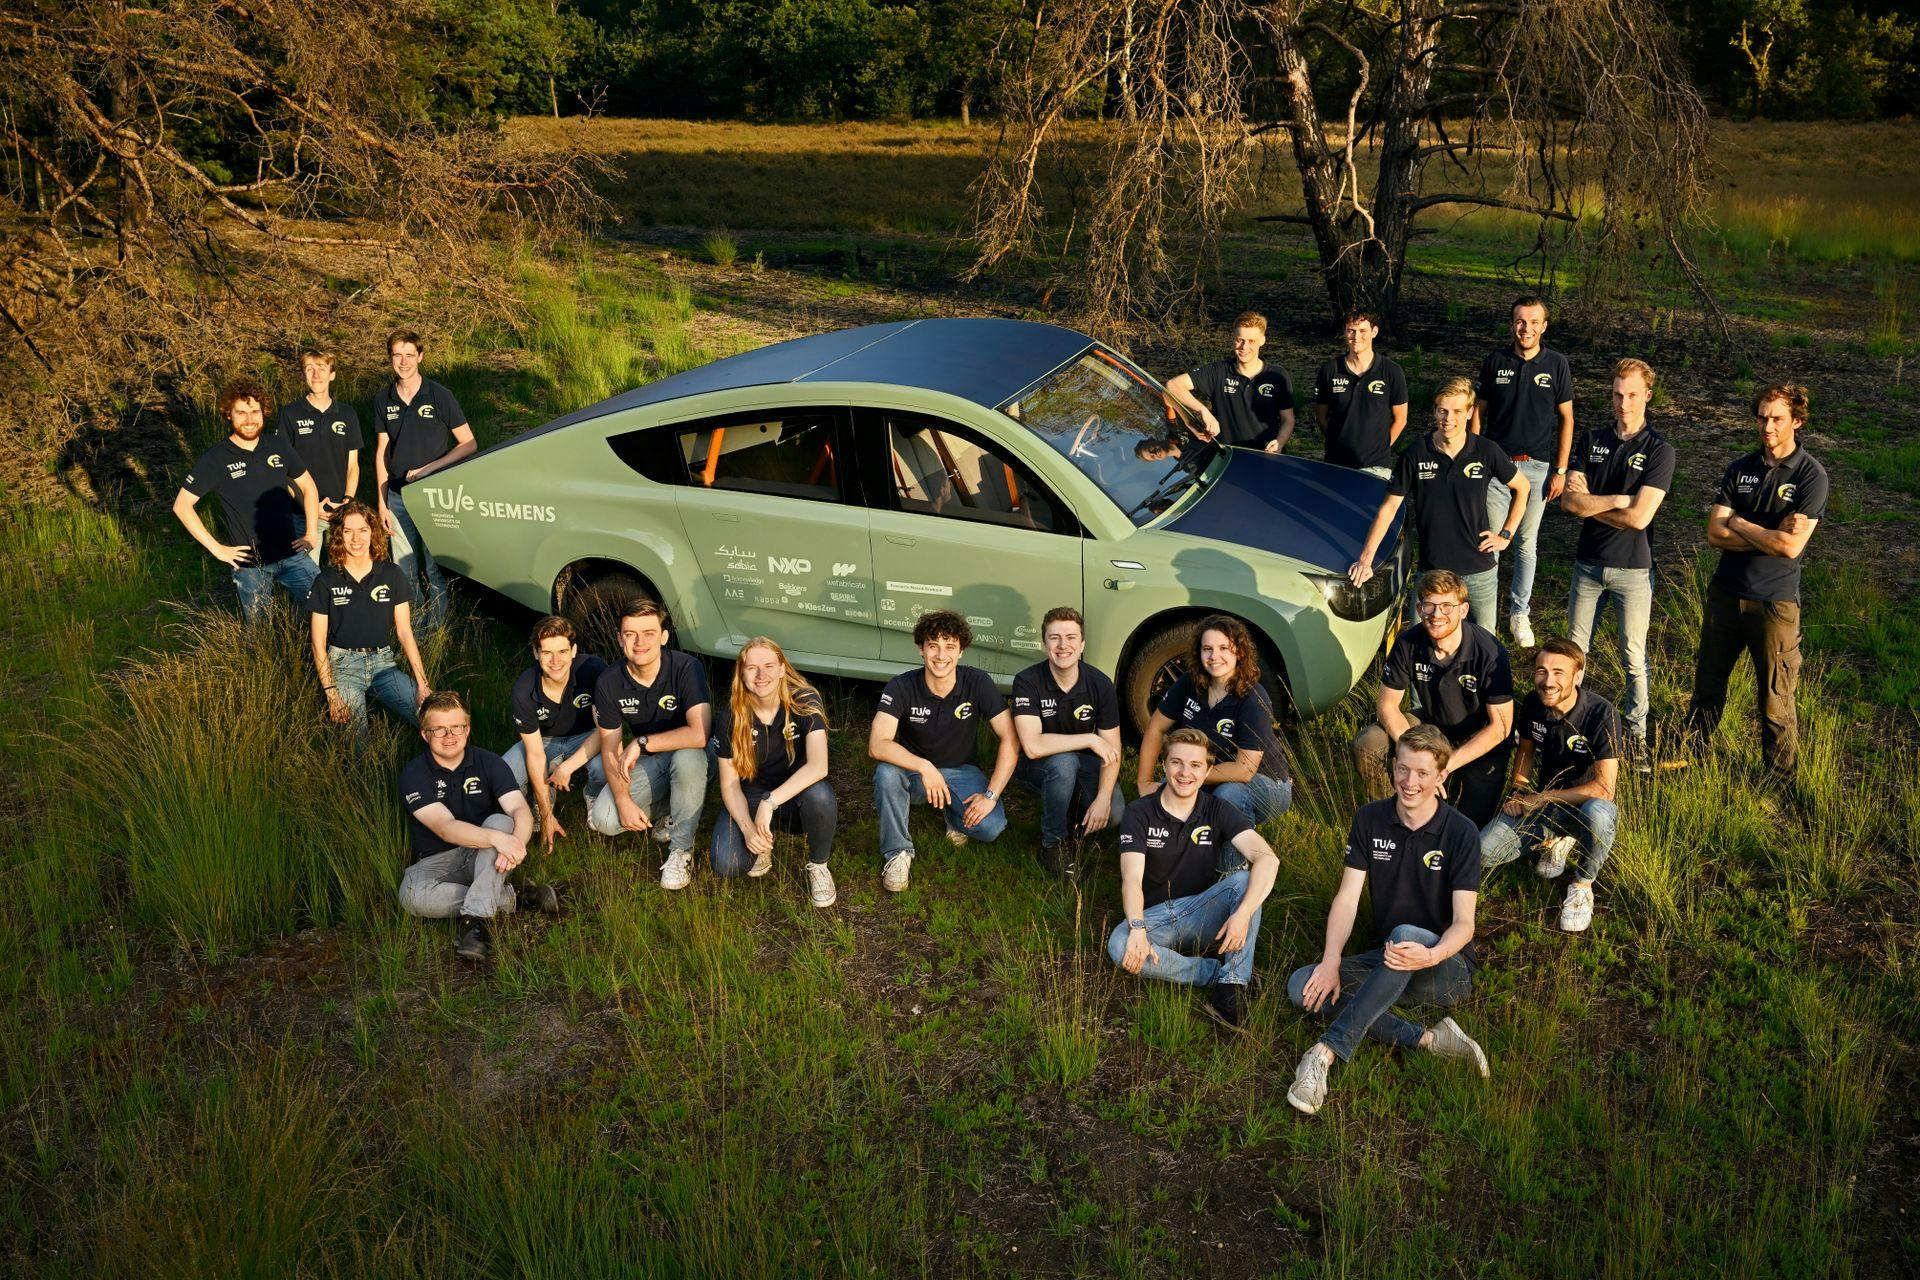  Solar Team Eindhoven presents the world's first off-road solar car: Stella Terra
